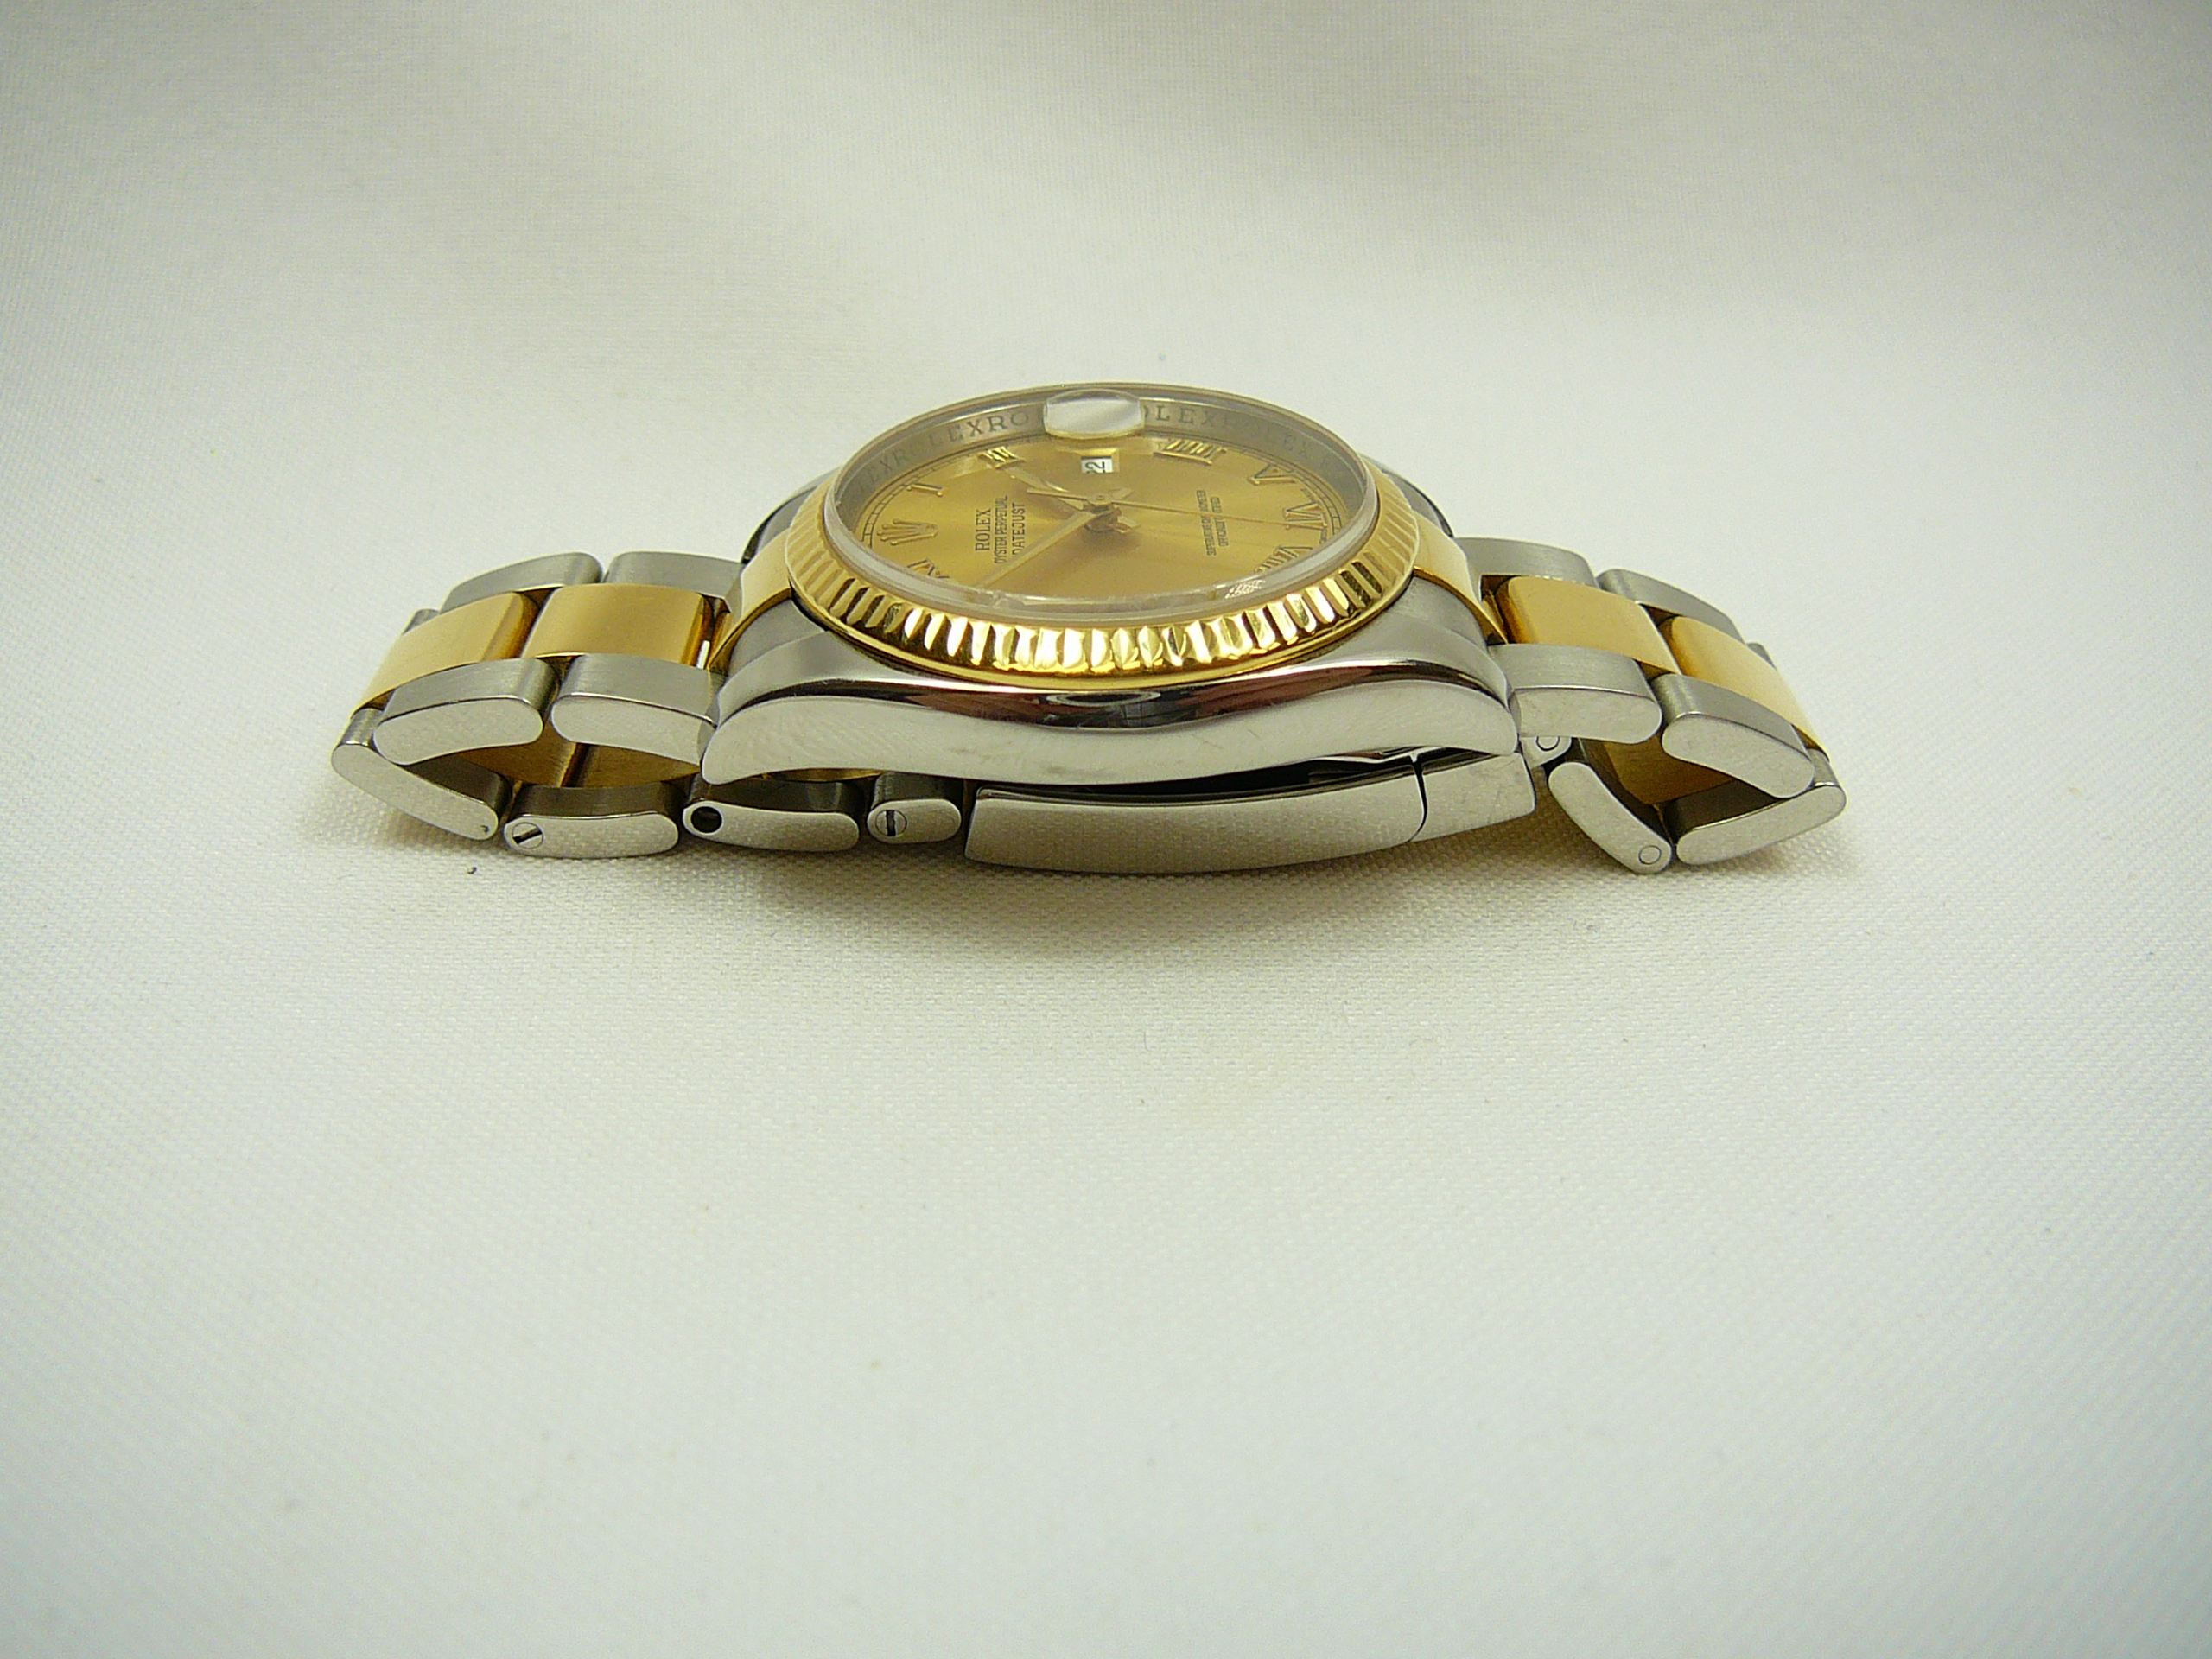 Gents Rolex Wristwatch - Image 7 of 9